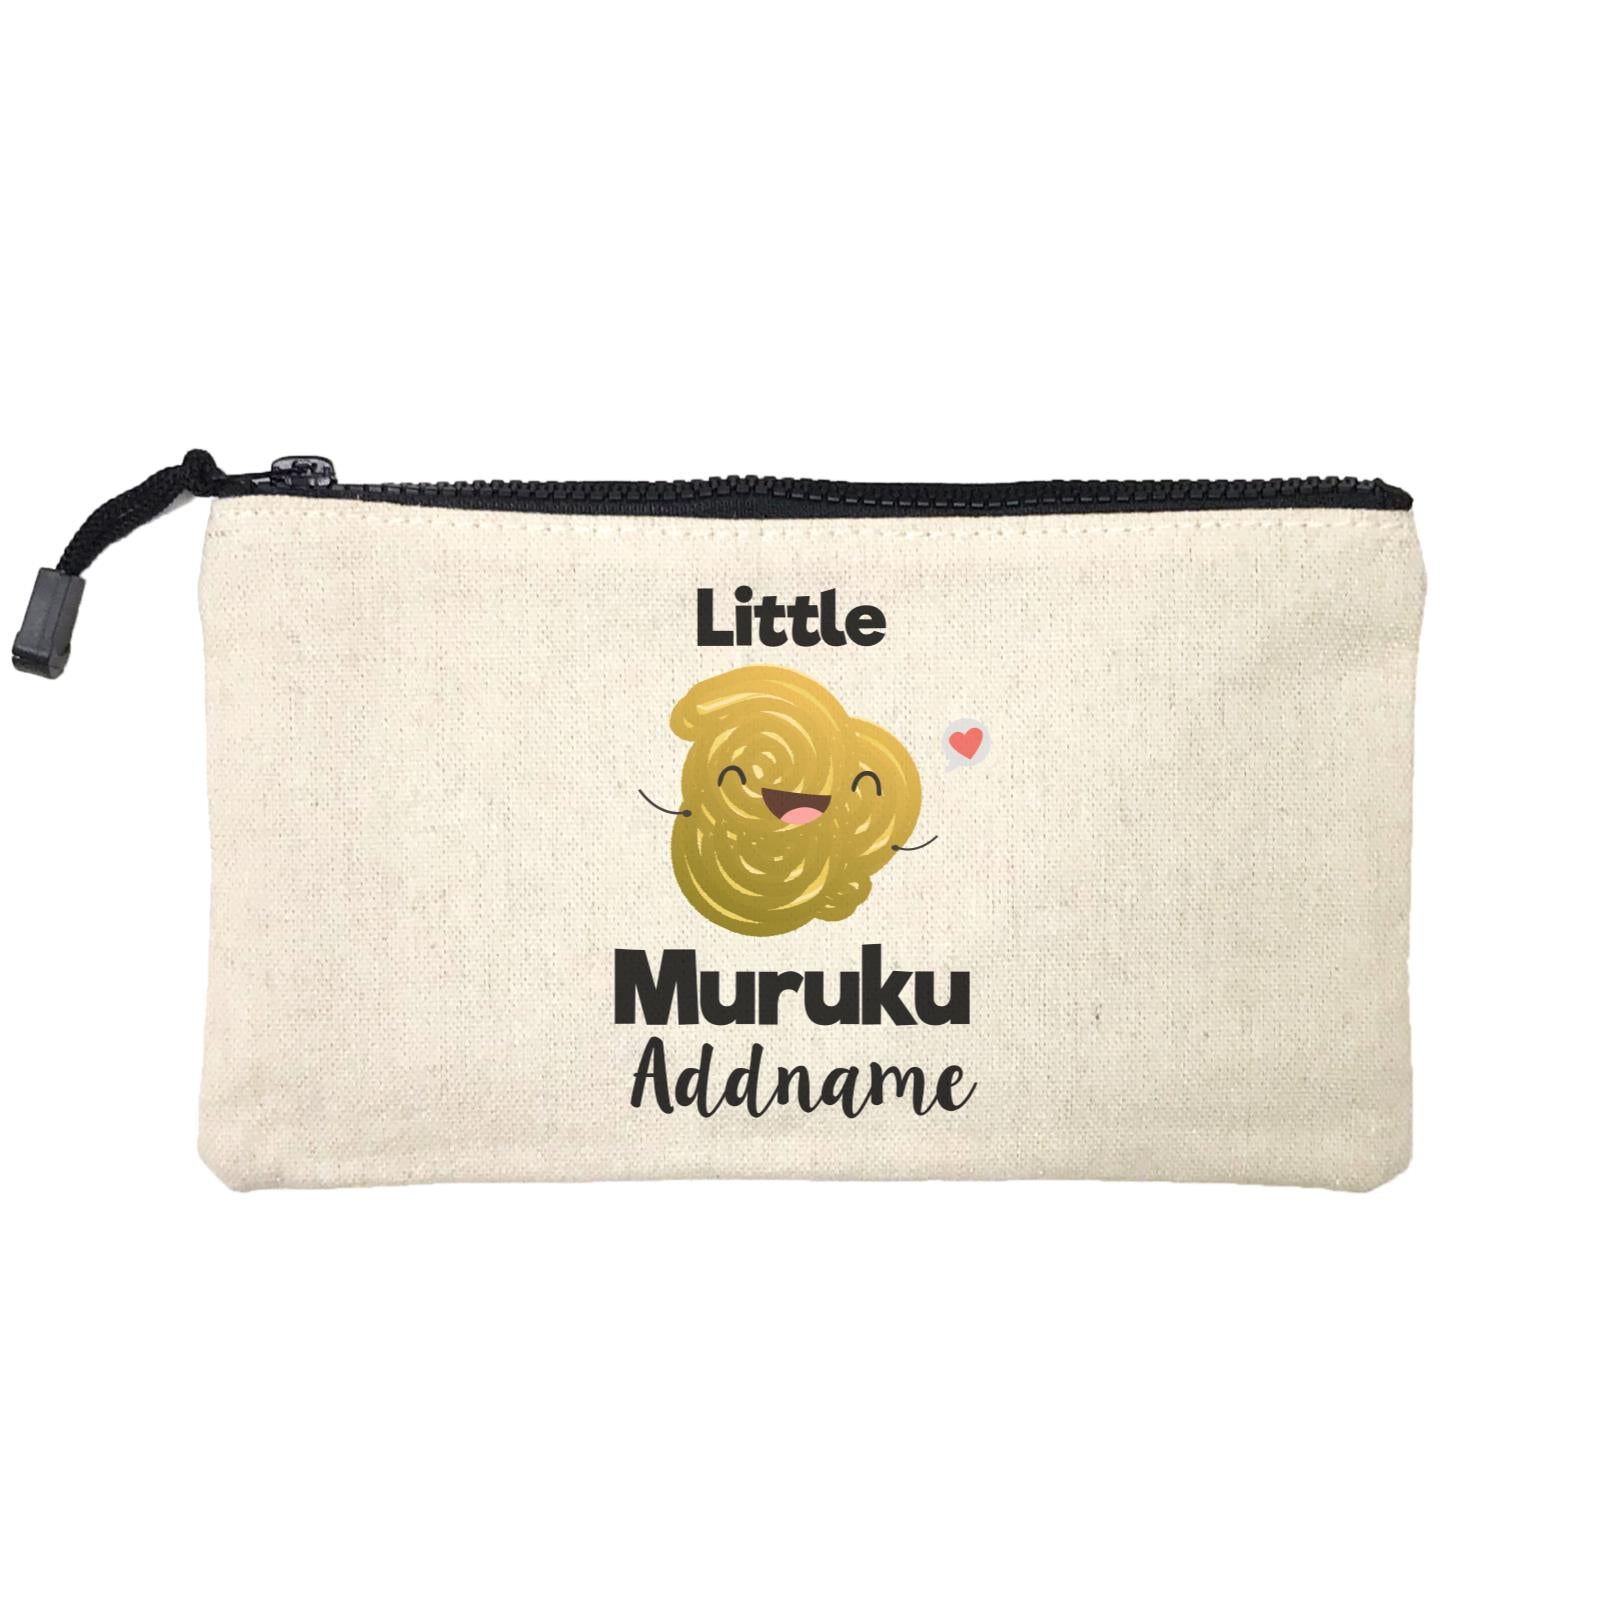 Little Muruku Addname Mini Accessories Stationery Pouch